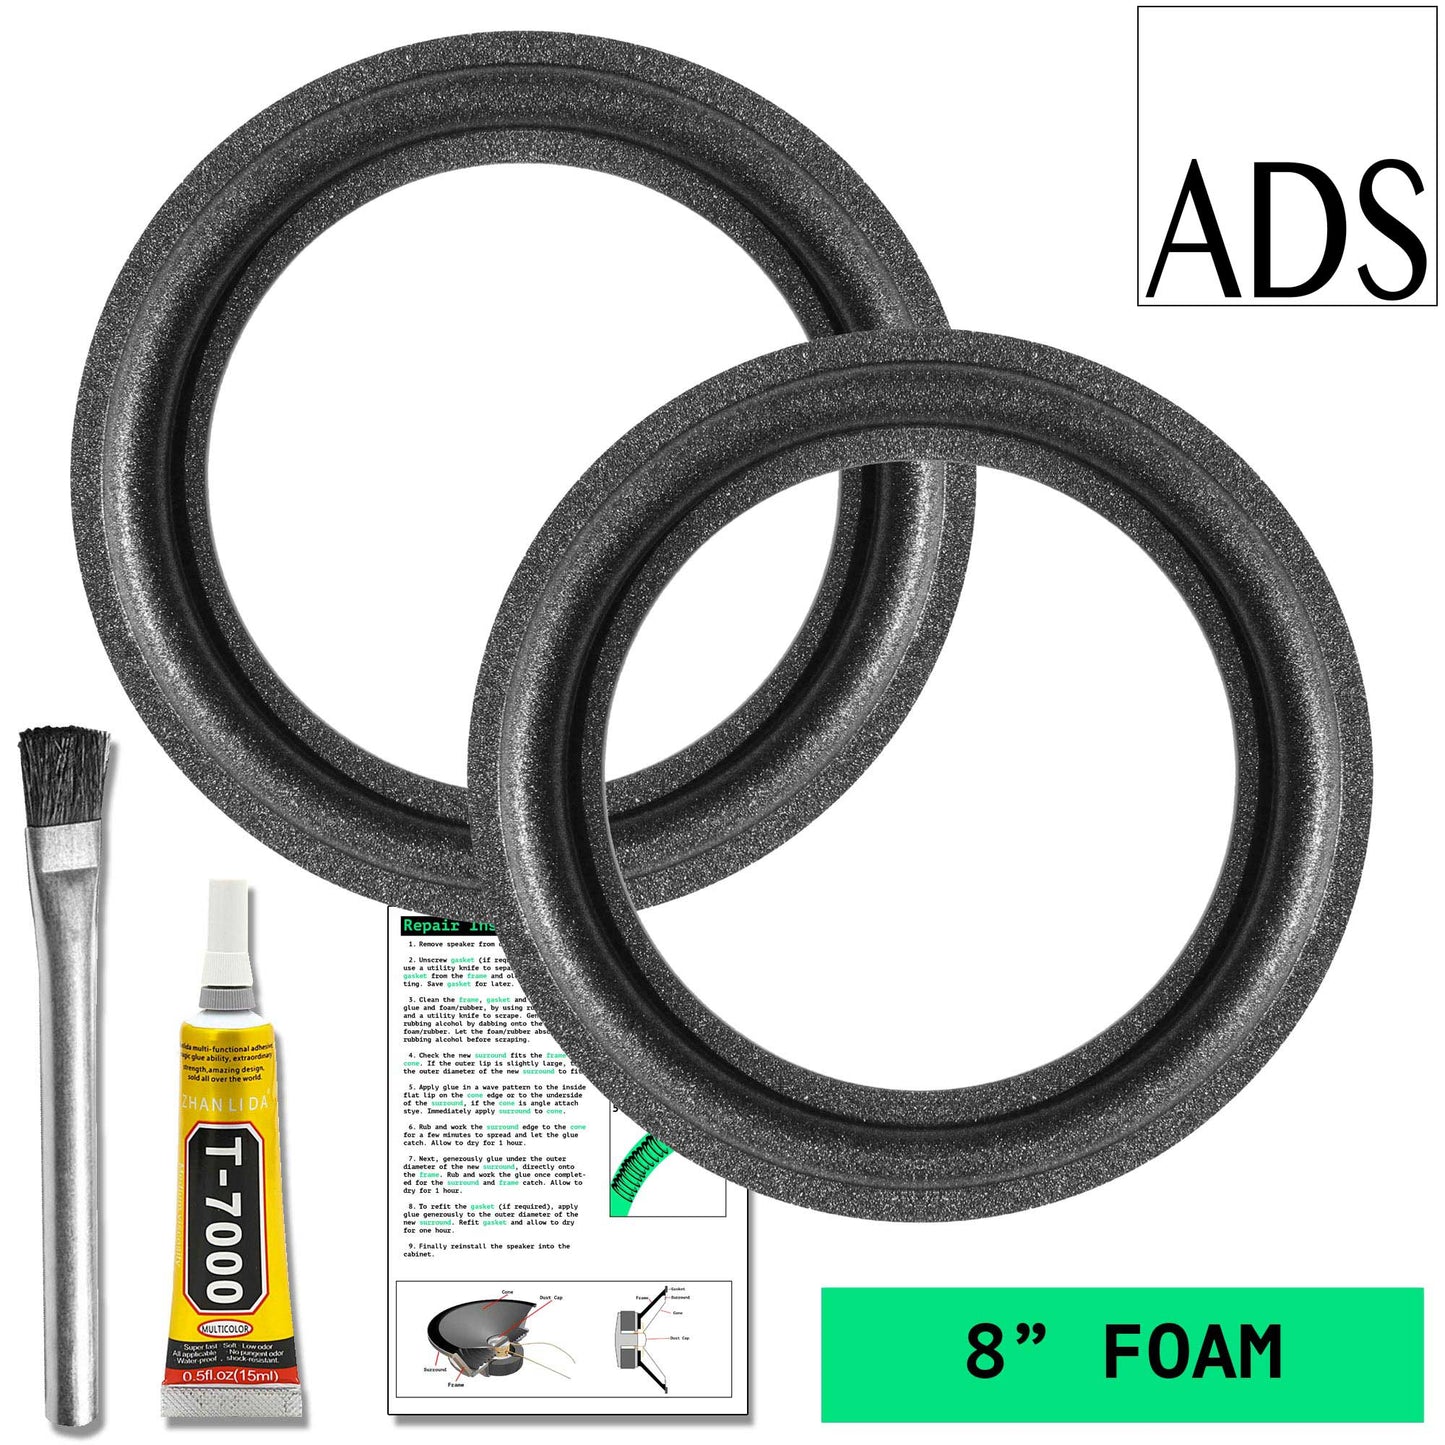 ADS L570/2 8" Foam Repair Kit